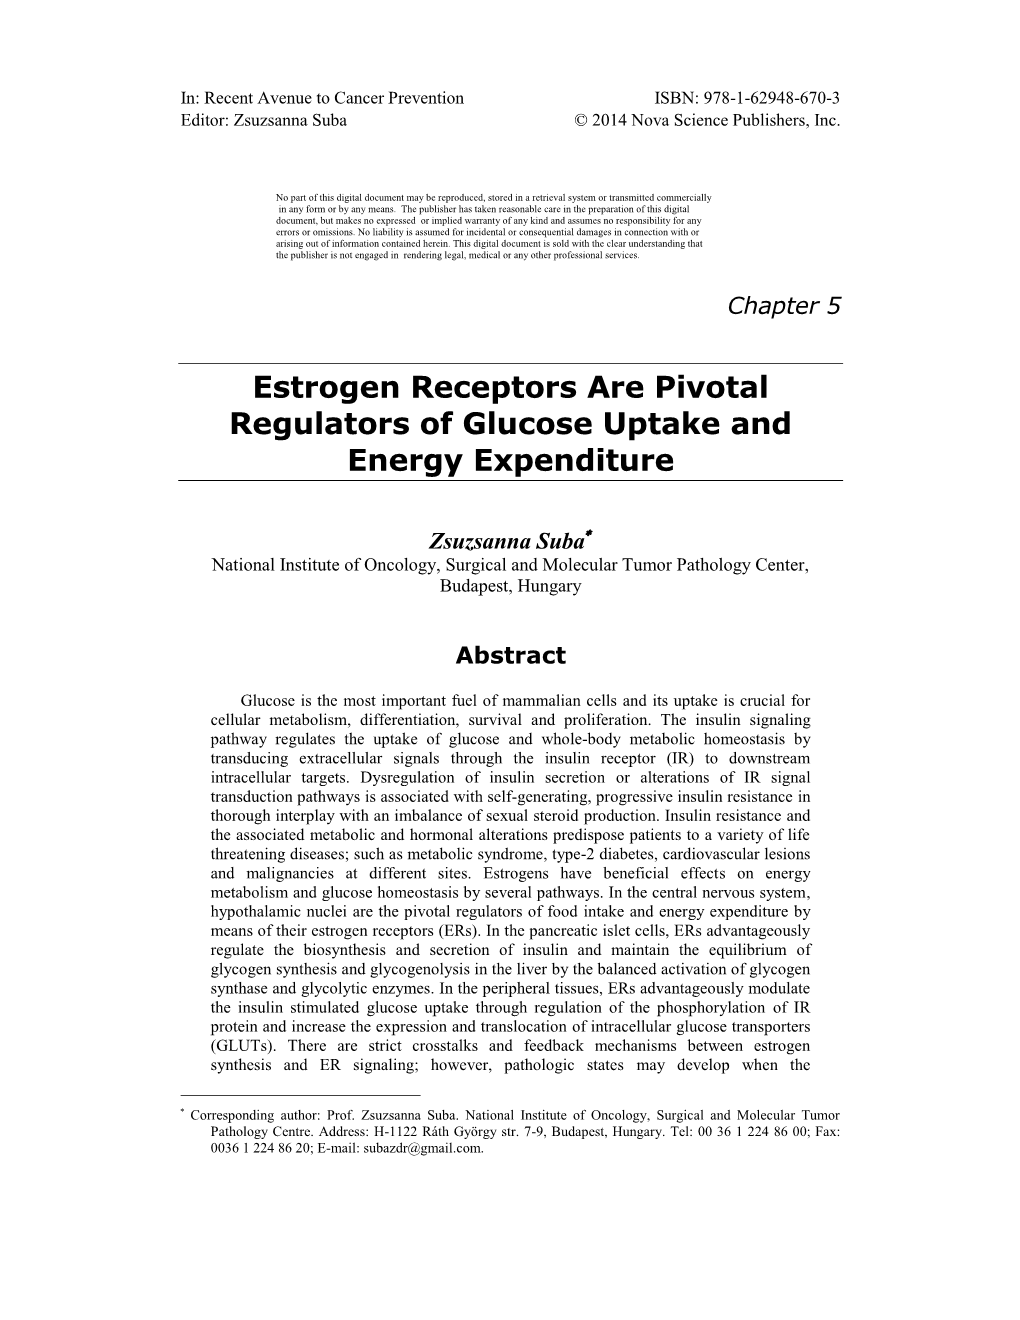 Estrogen Receptors Are Pivotal Regulators of Glucose Uptake and Energy Expenditure